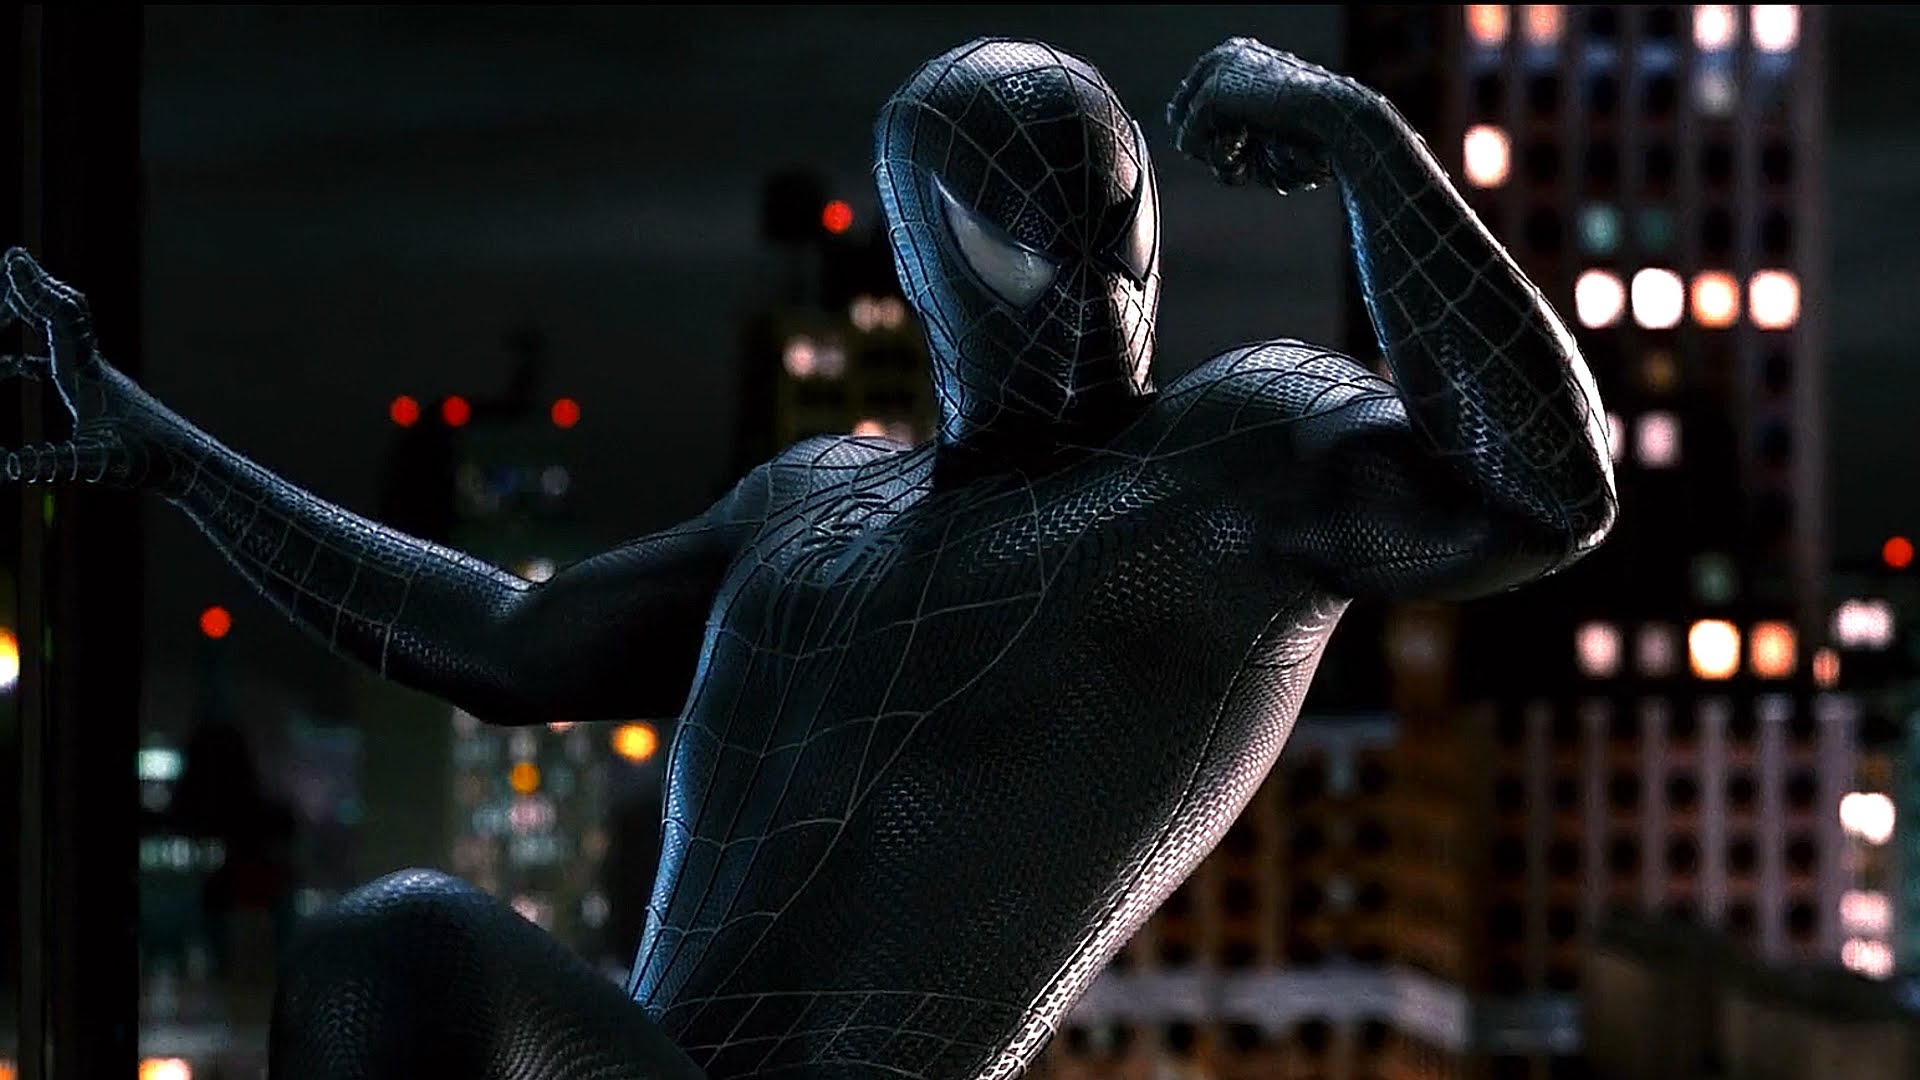 Hᴇʟʟʏ Rᴀᴠᴇɴ on Twitter: "Ciertamente #Spiderman3 (Tobey Maguire)